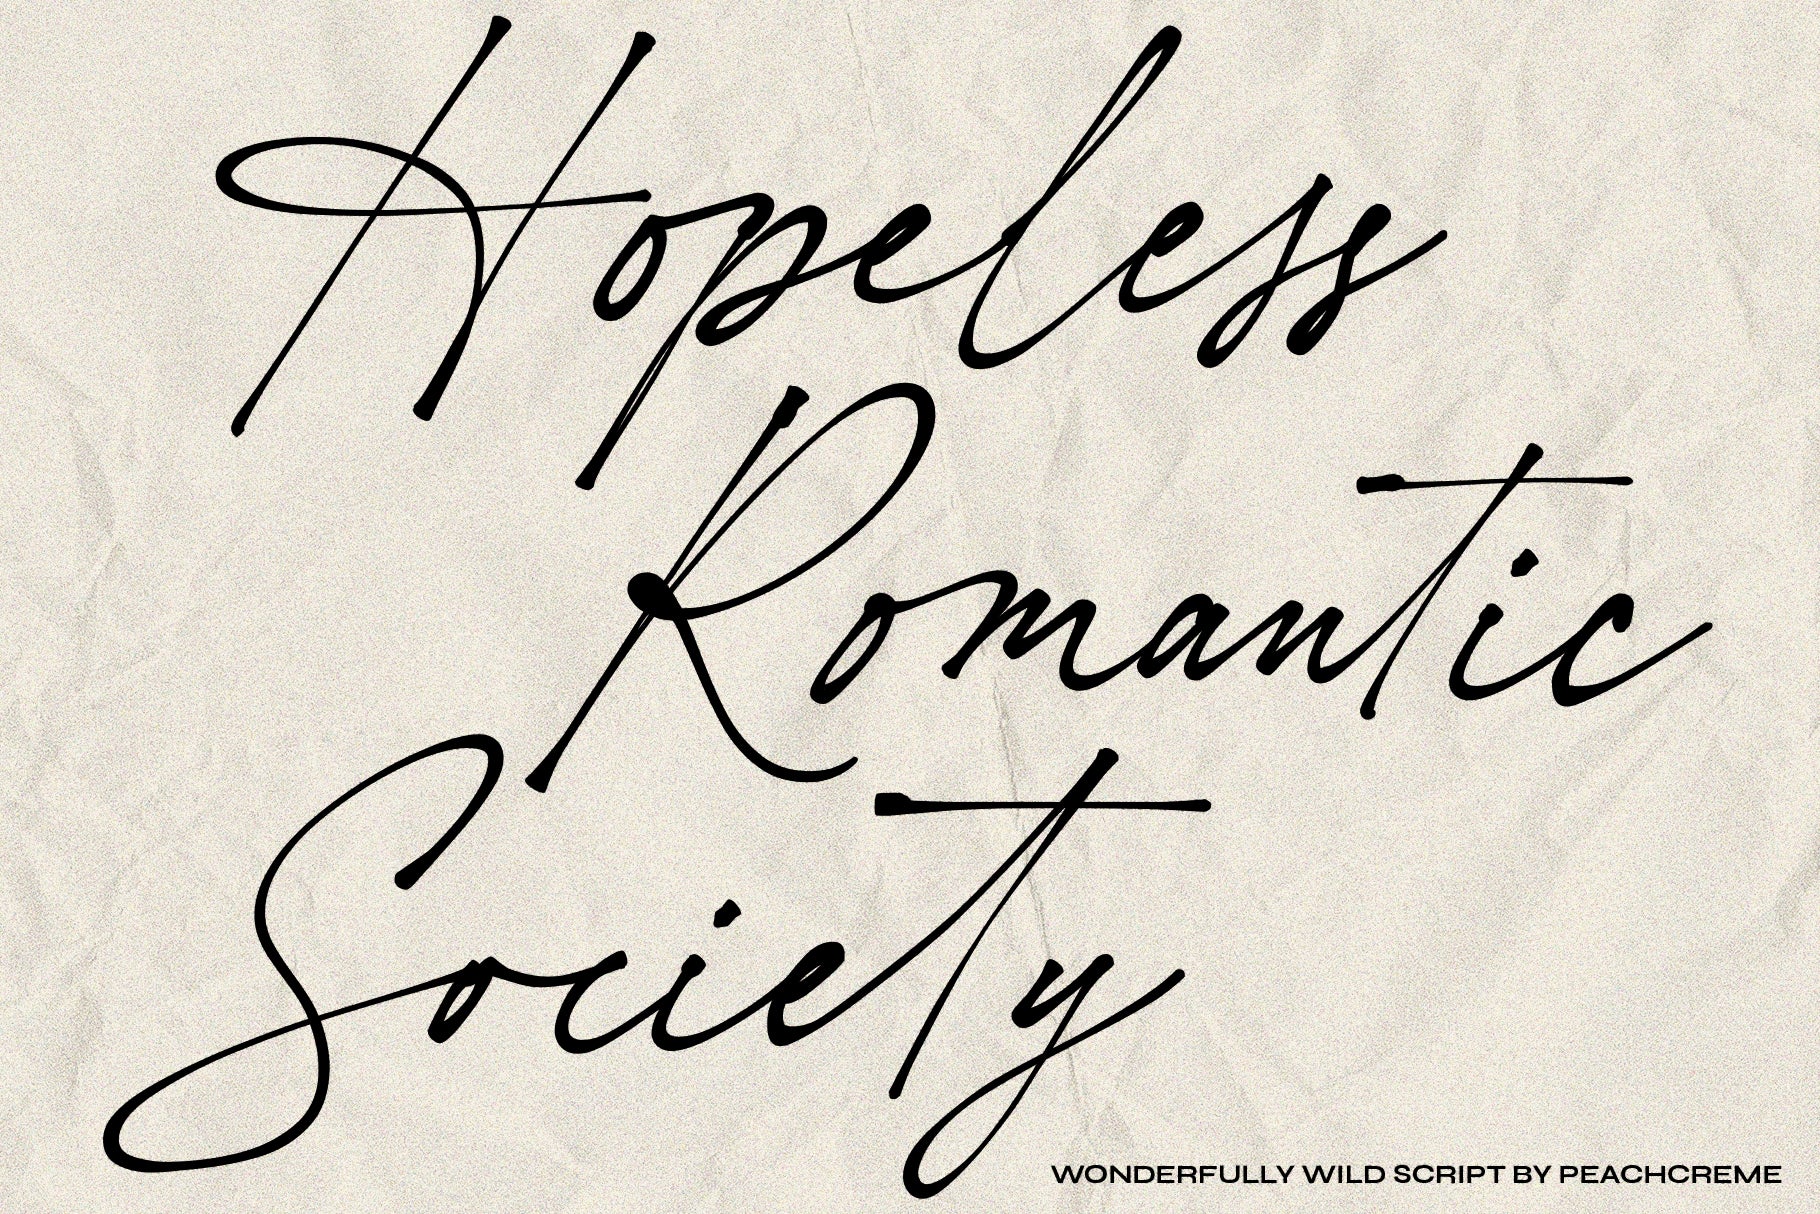 Hopeless Romantic Society // Script